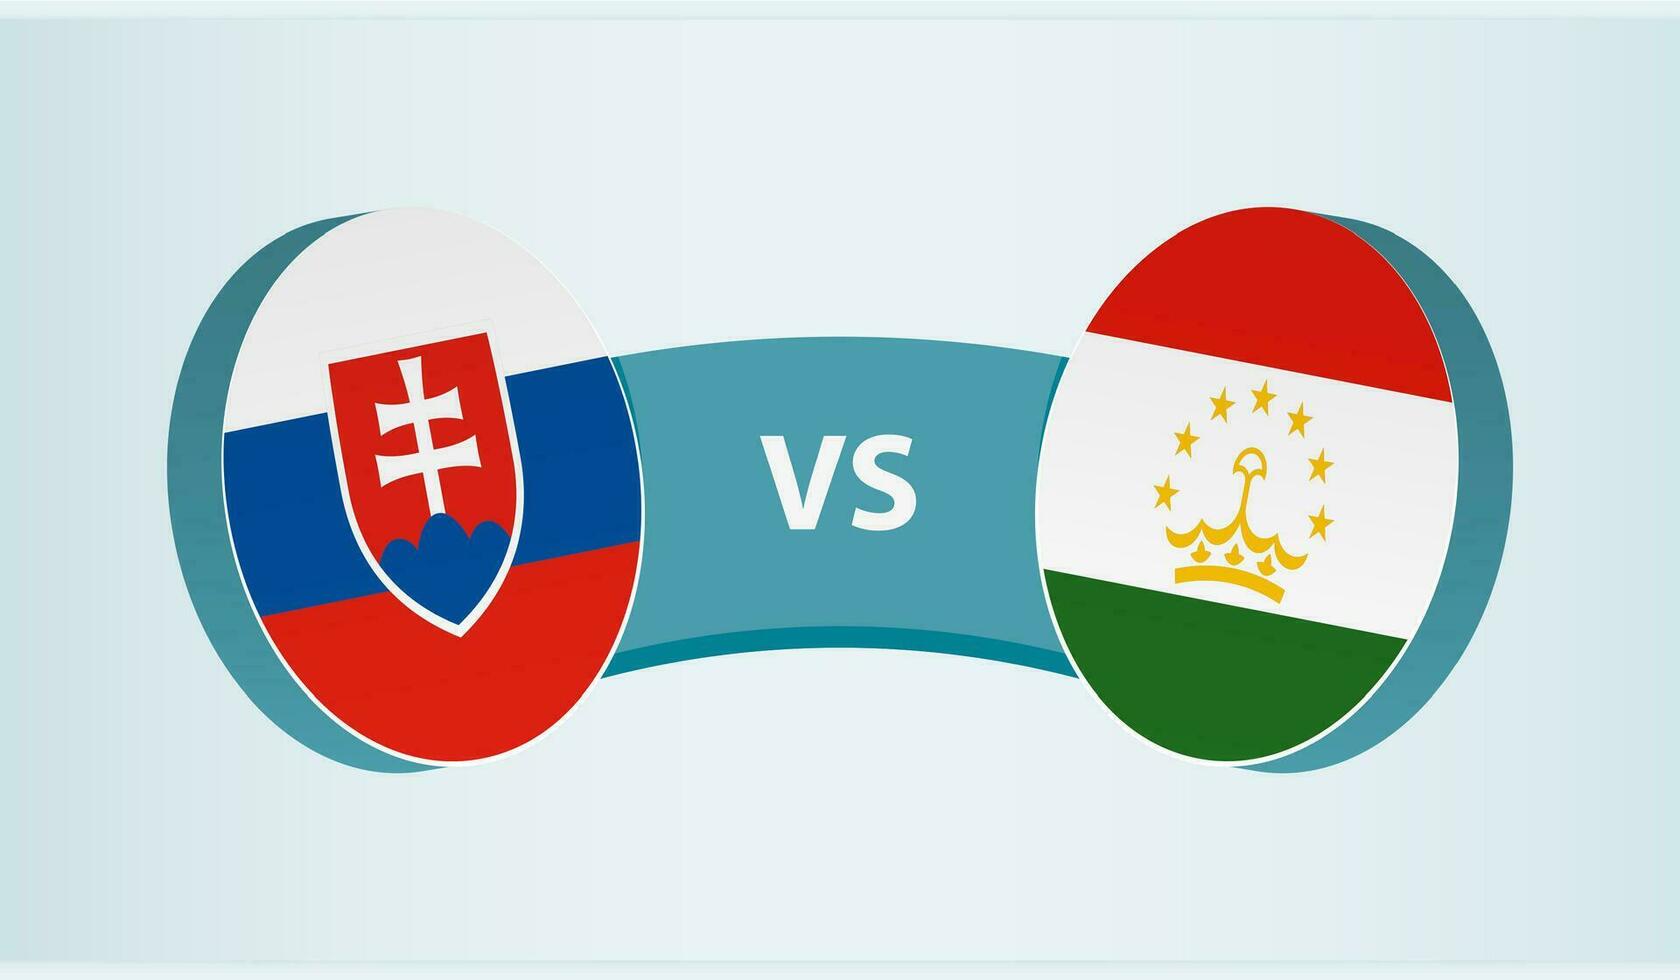 slovakia mot tadzjikistan, team sporter konkurrens begrepp. vektor